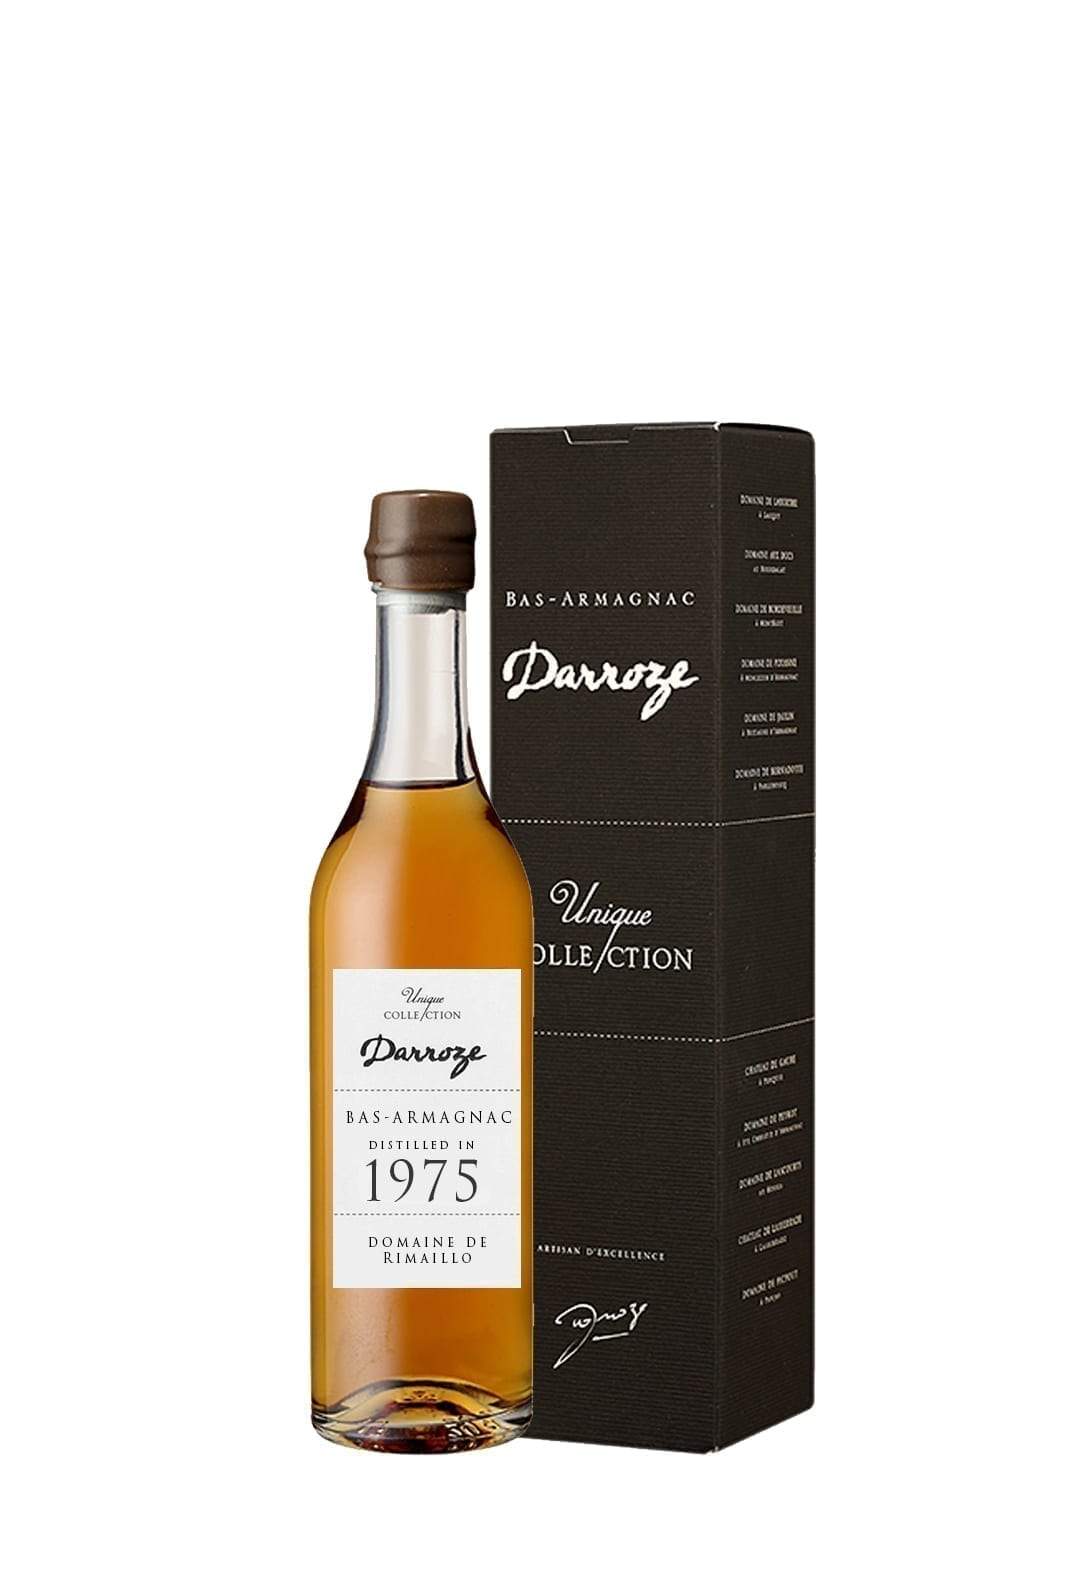 Darroze 1975 Rimaillo Grand Bas Armagnac 43% 200ml | Brandy | Shop online at Spirits of France